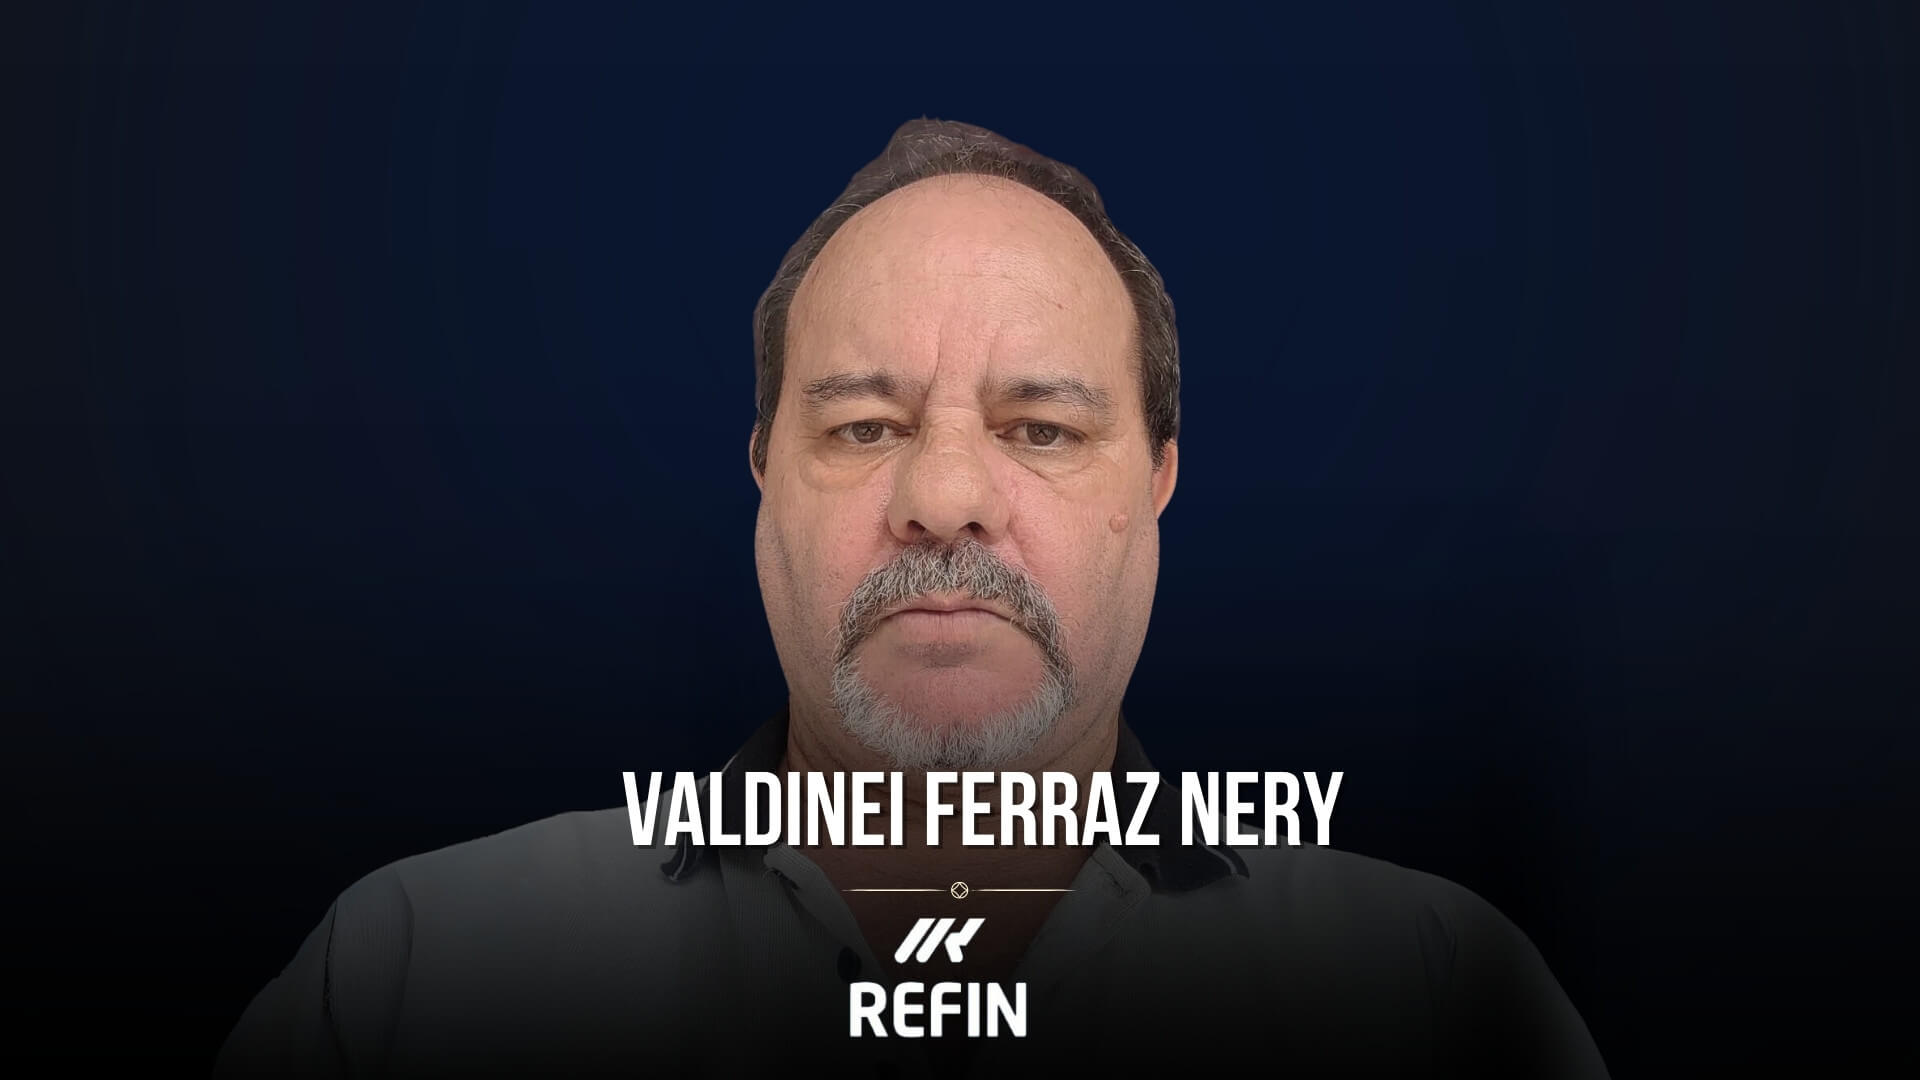 VALDINEI FERRAZ NERY